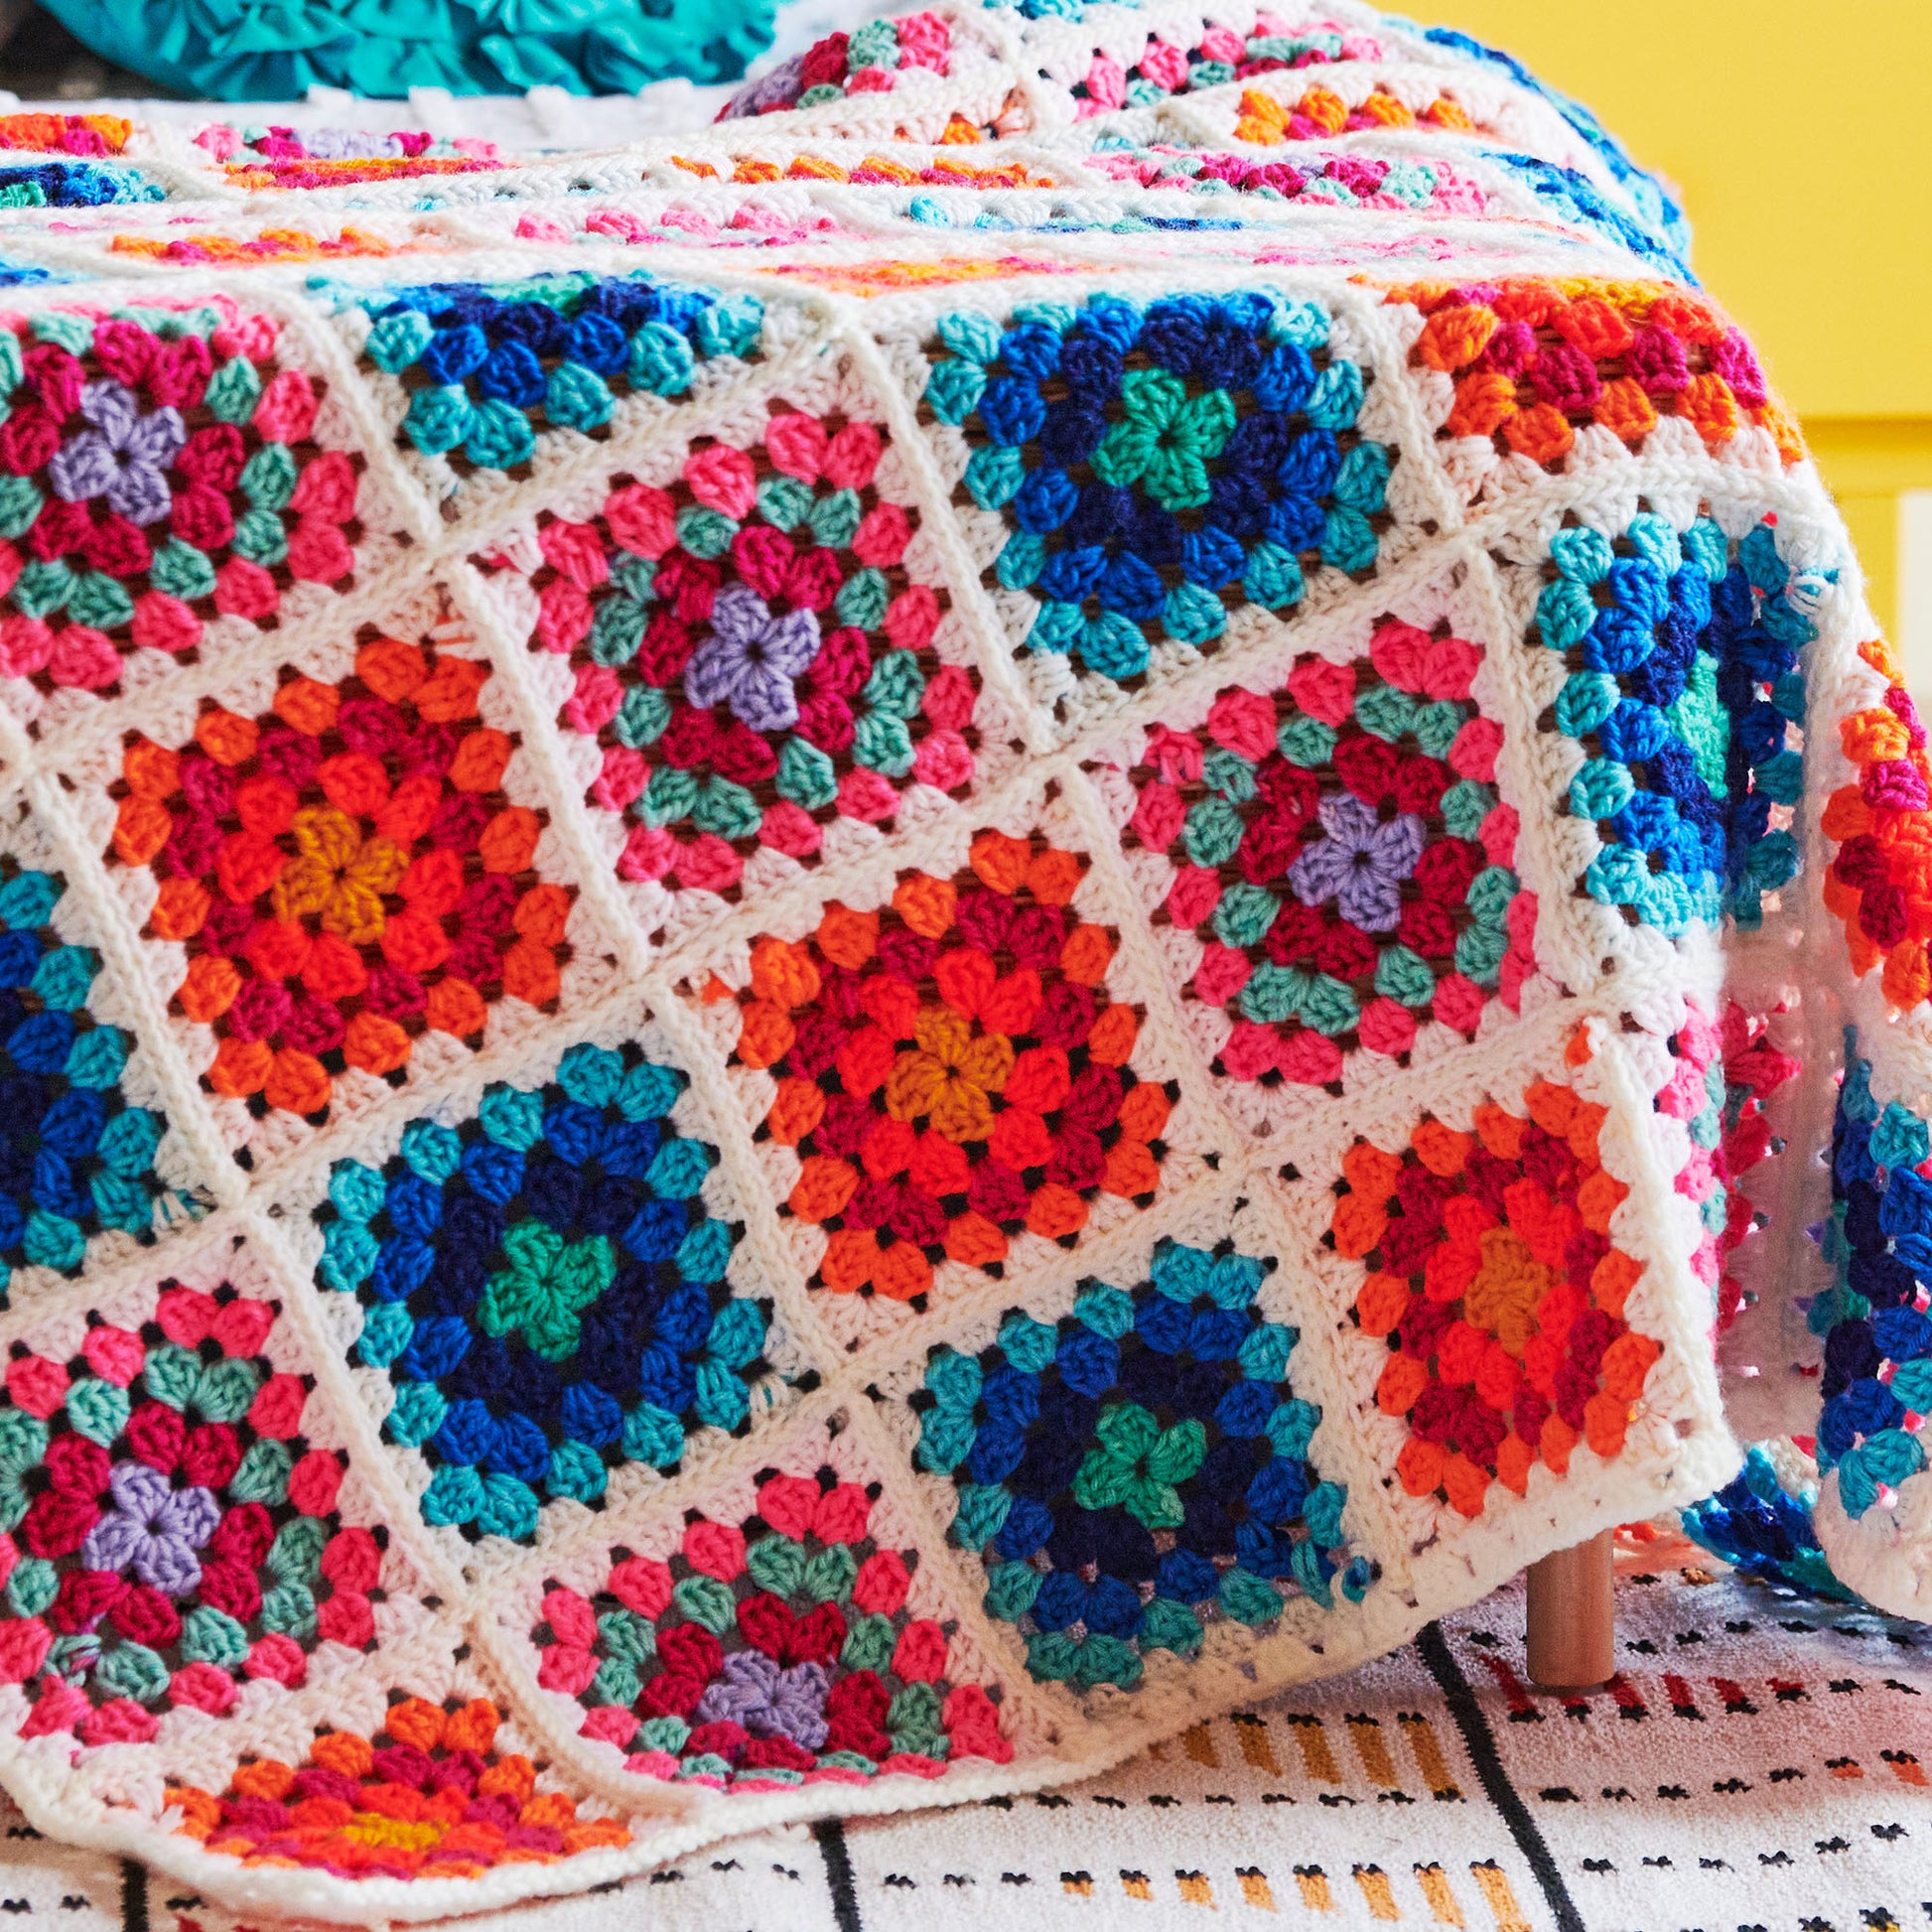 Free Red Heart Spectrum Dreams Crochet Granny Square Blanket Pattern